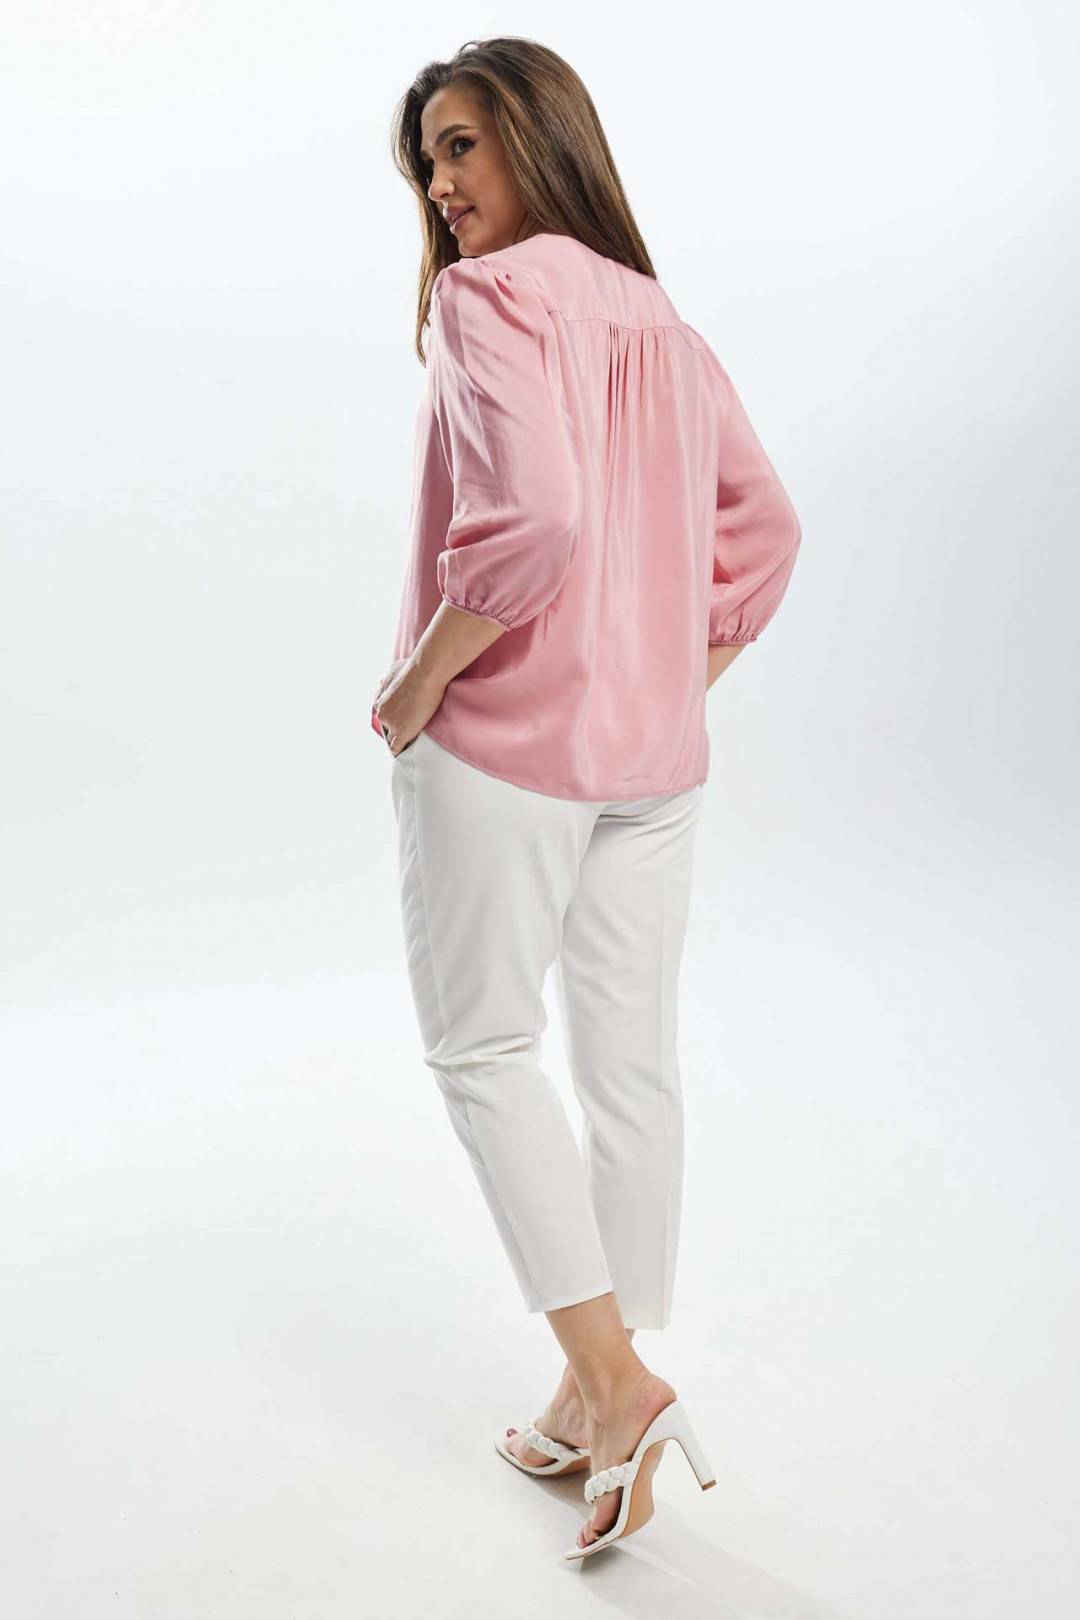 Блузка MisLana С909 розовый